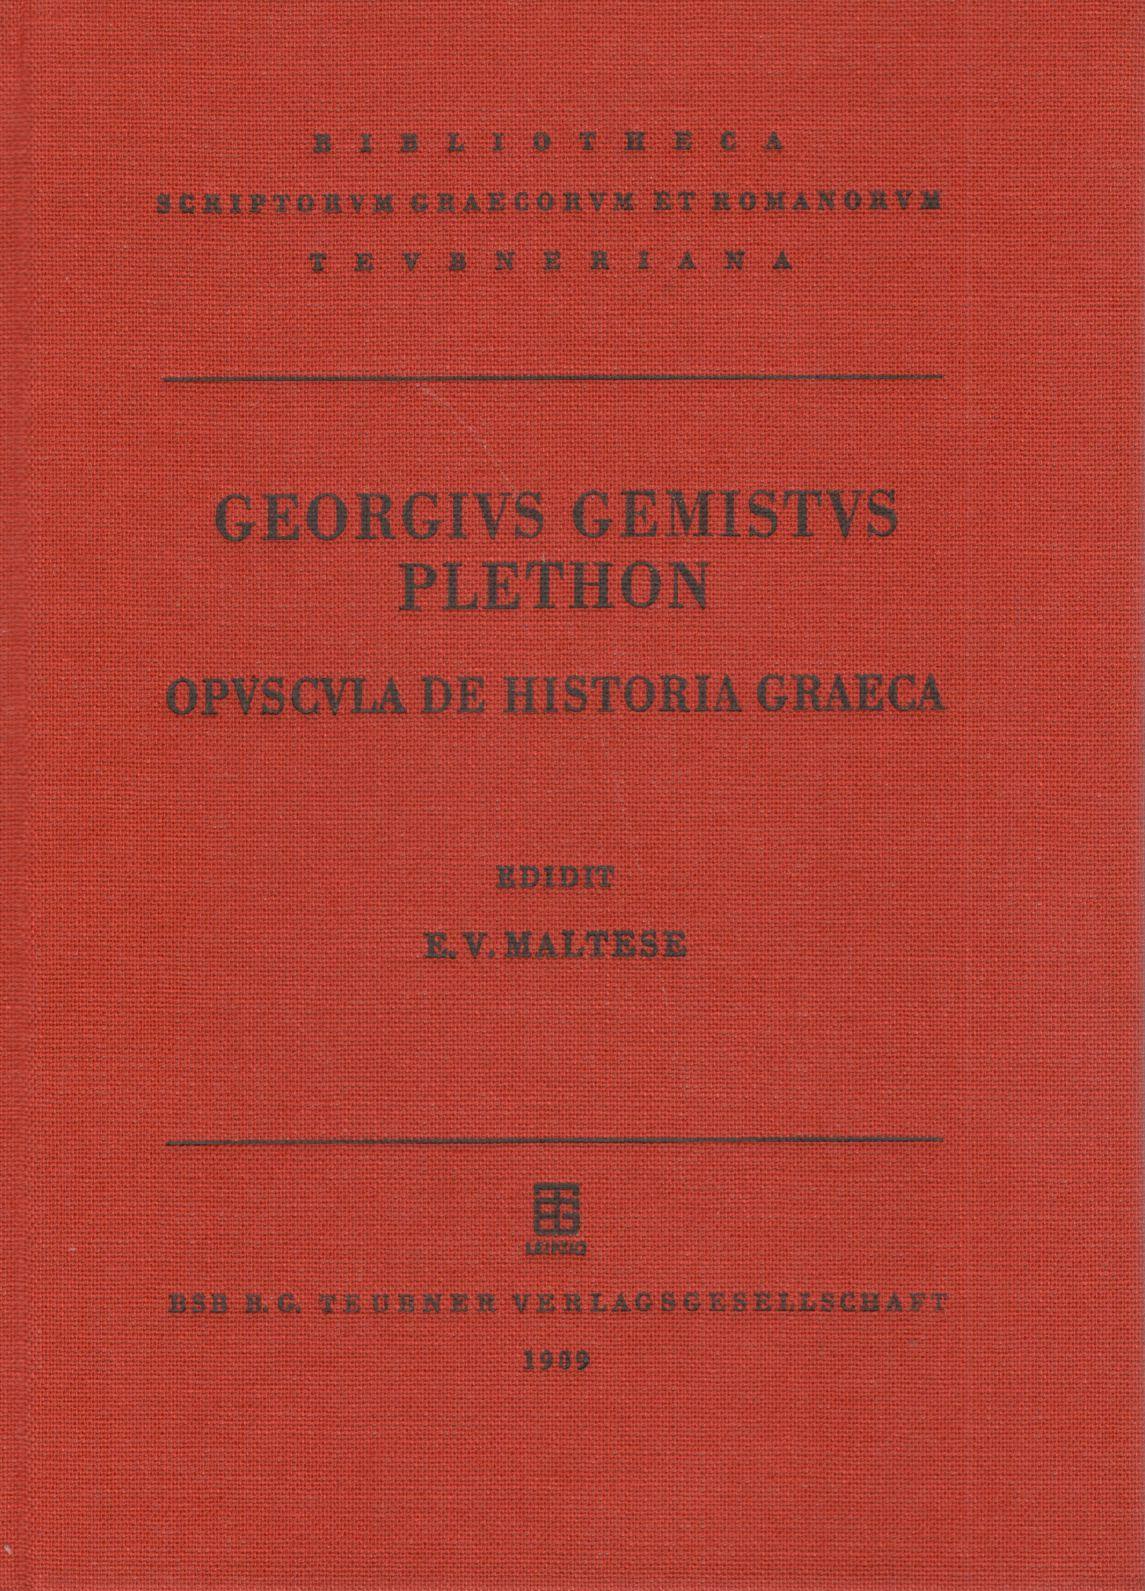 GEORGII GEMISTI PLETHONIS OPUSCULA DE HISTORIA GRAECA